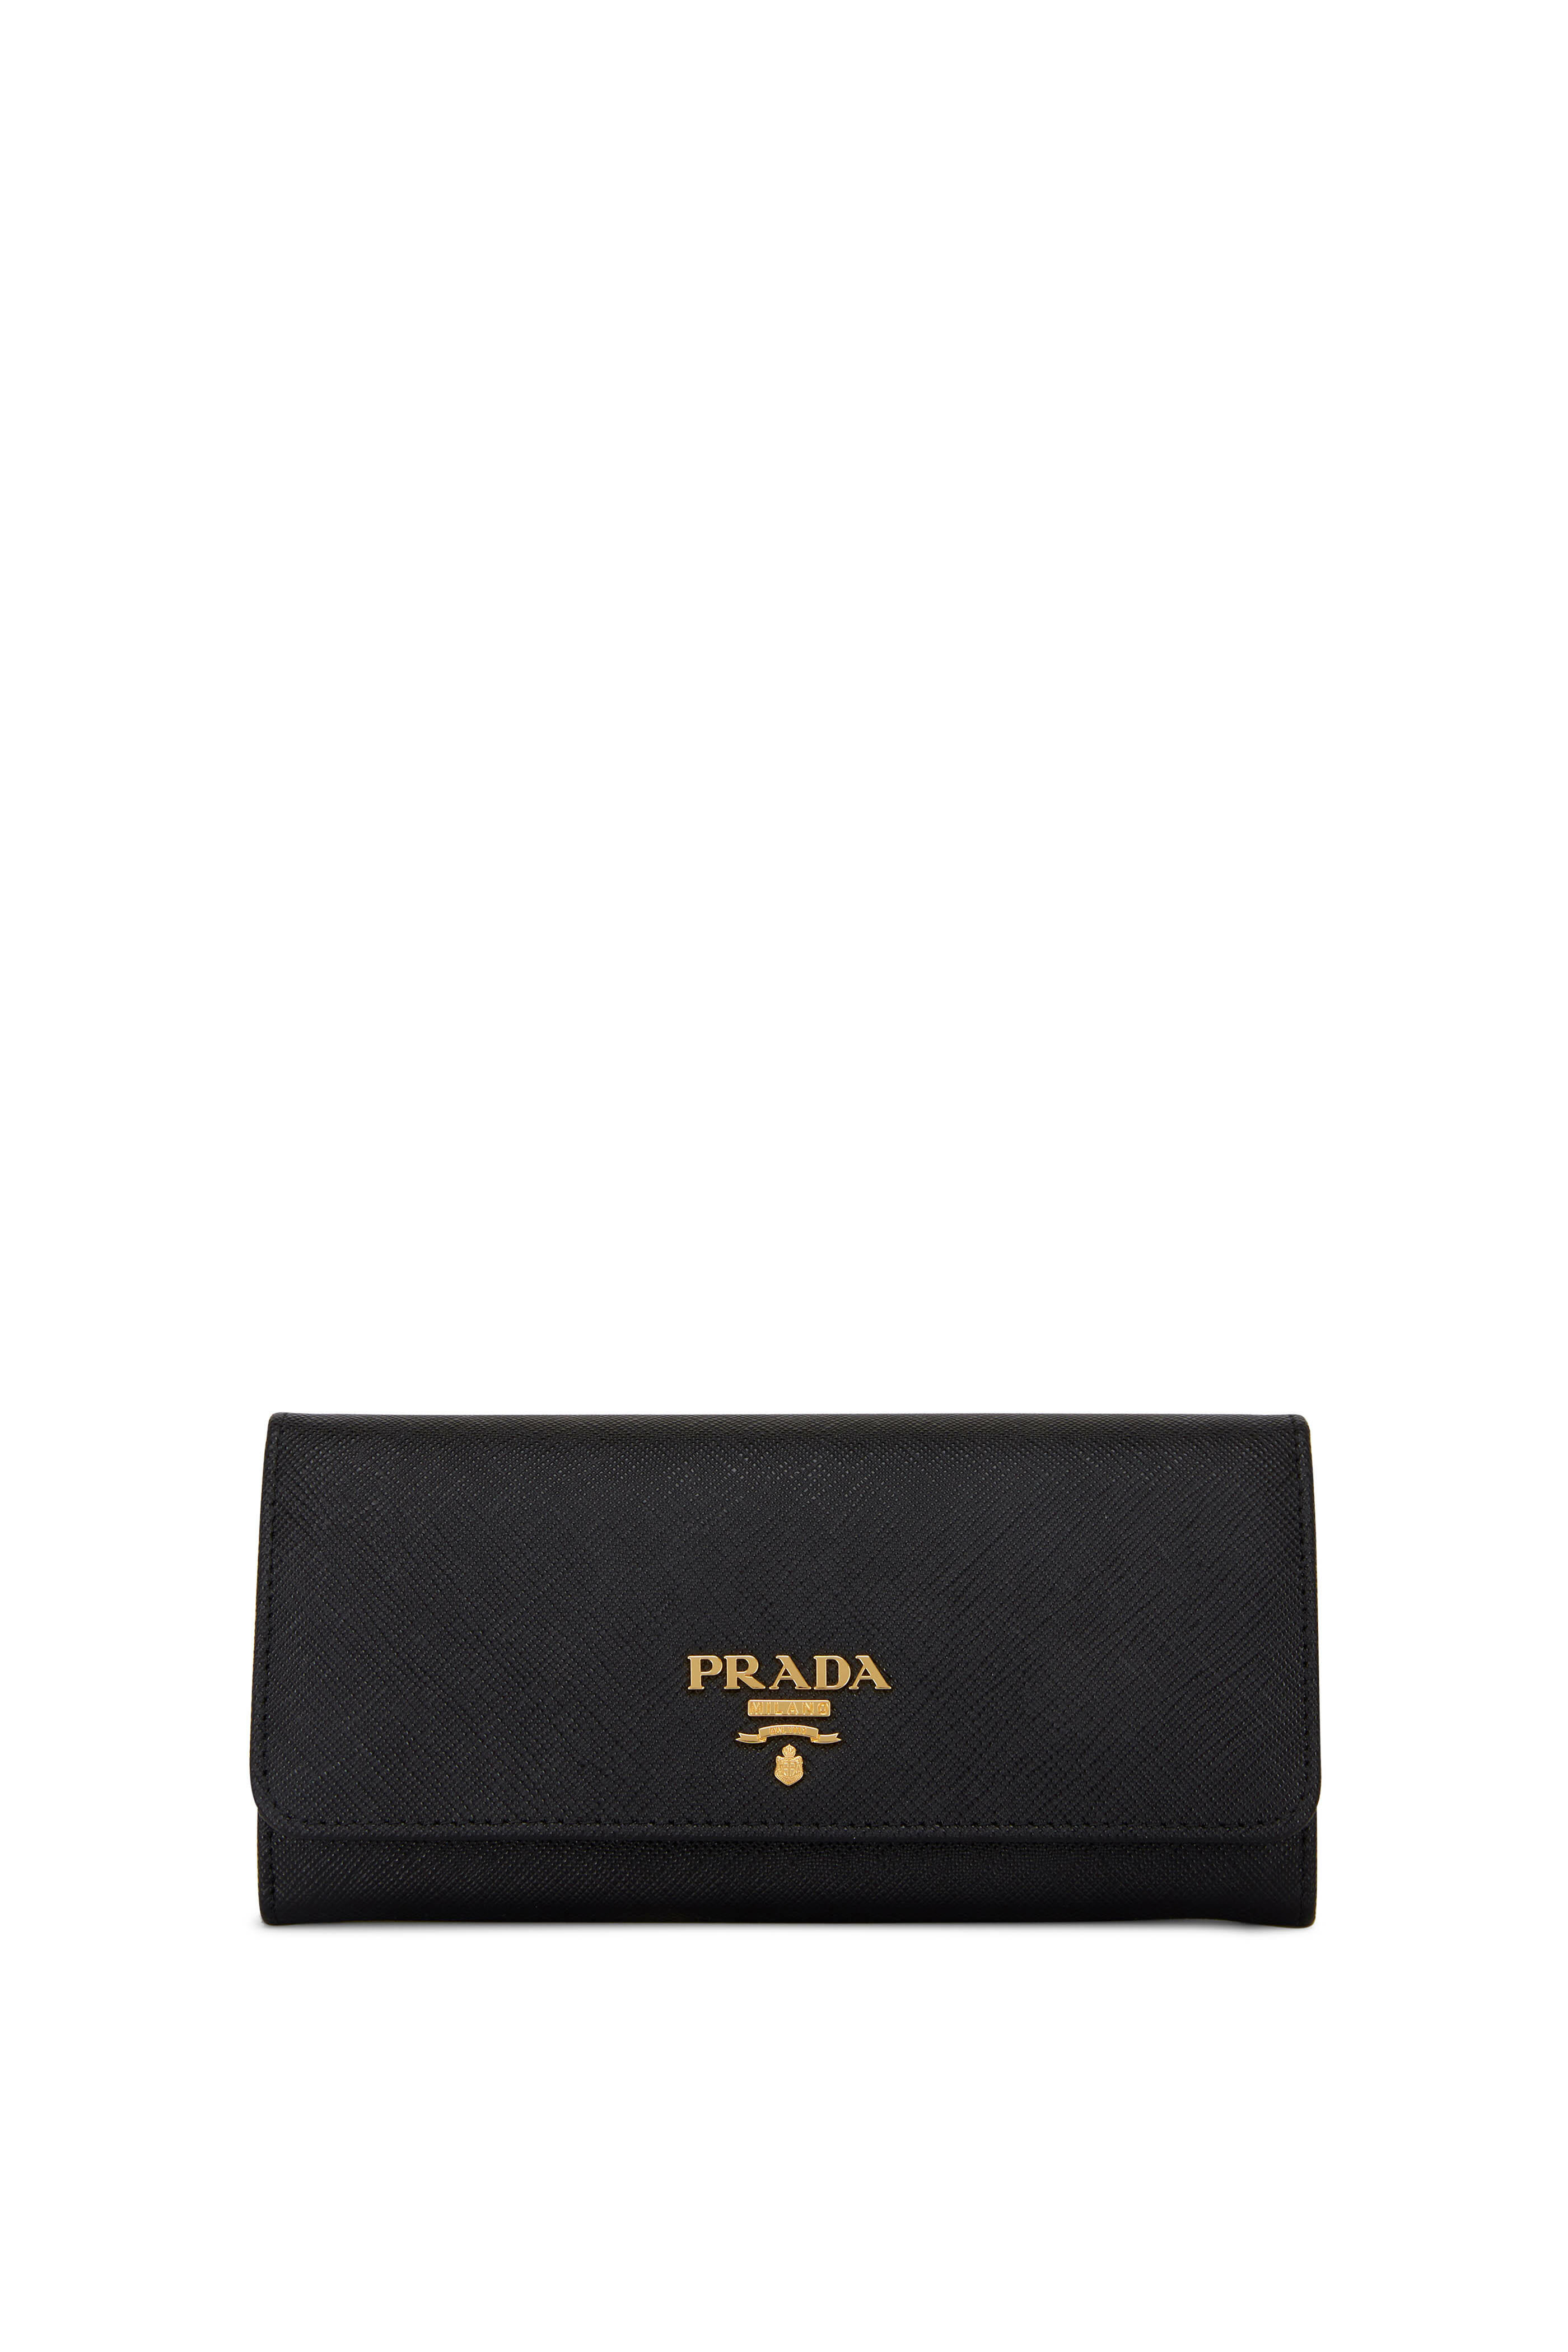 Prada - Black Saffiano Leather Large Flap Wallet